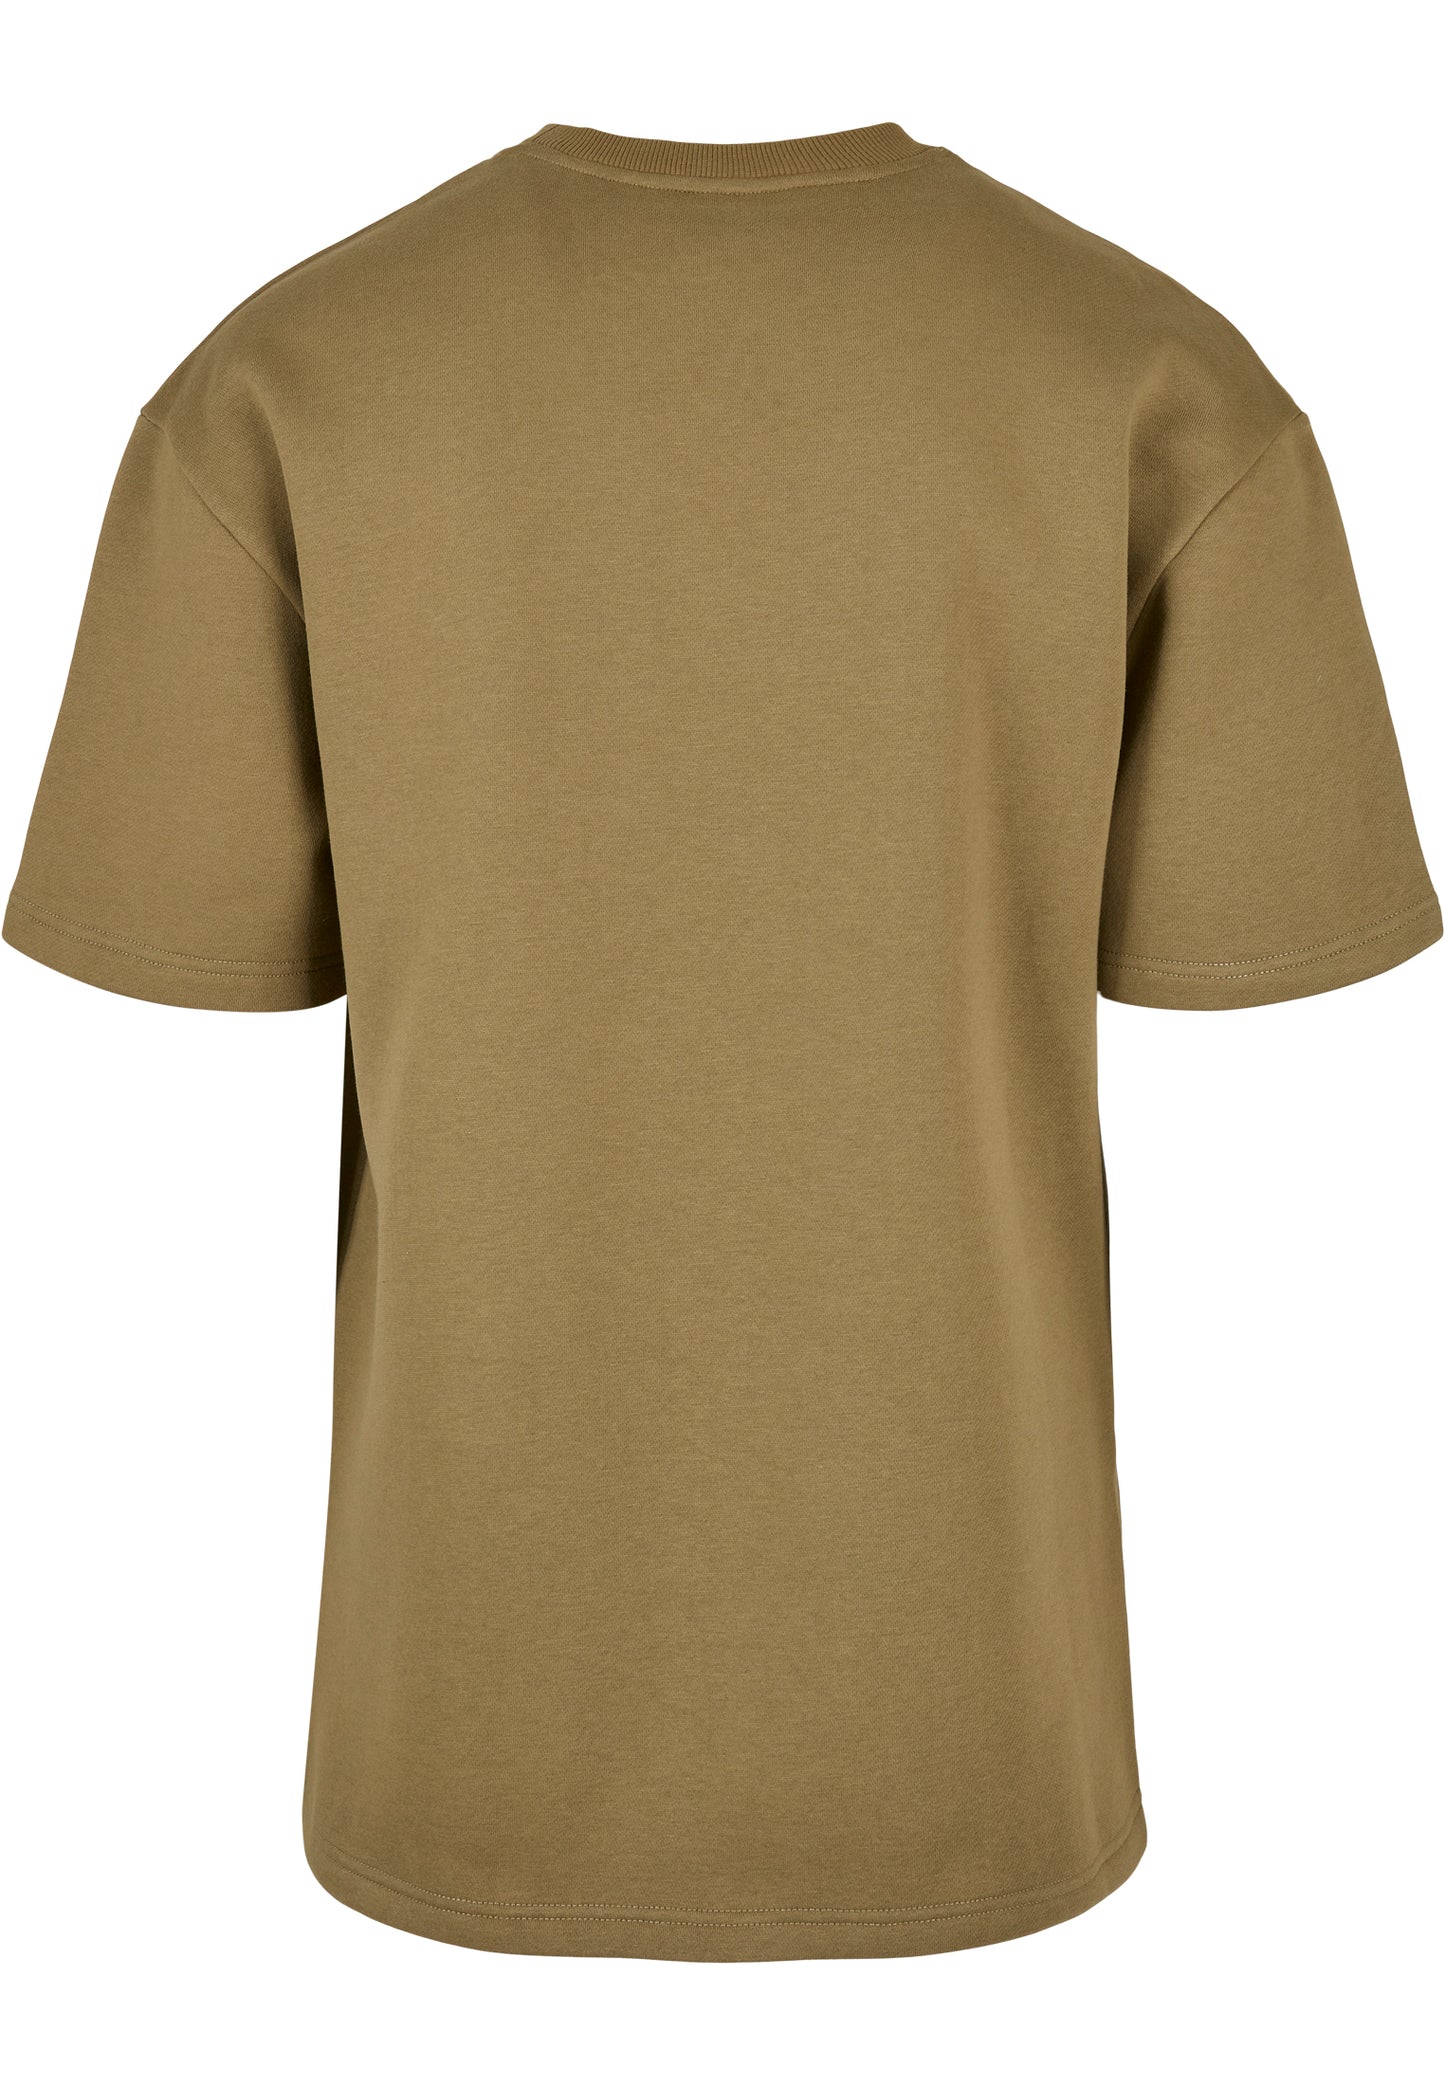 Urban Classics Oversized Sweat T-Shirt in Tiniolive